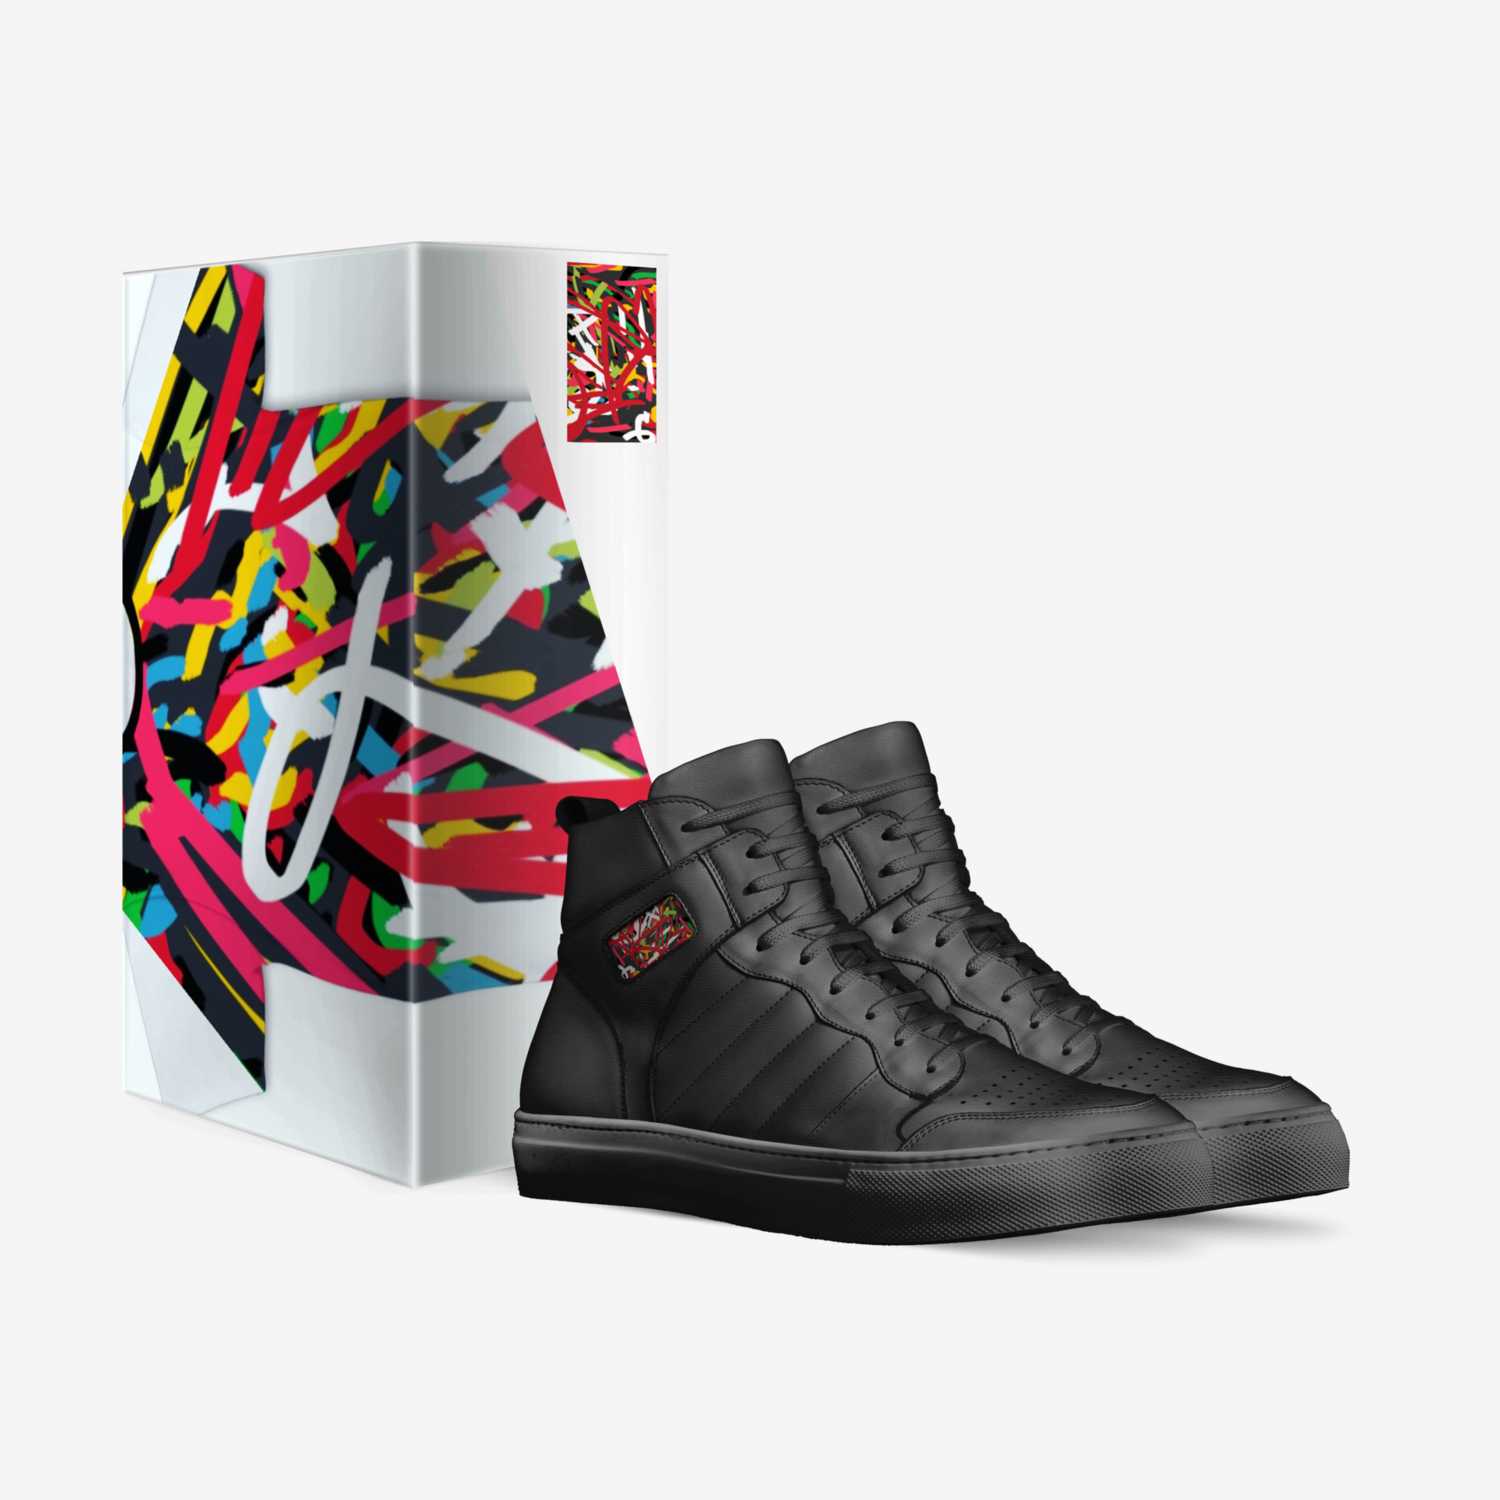 Artbycav custom made in Italy shoes by Caviar Dreams | Box view